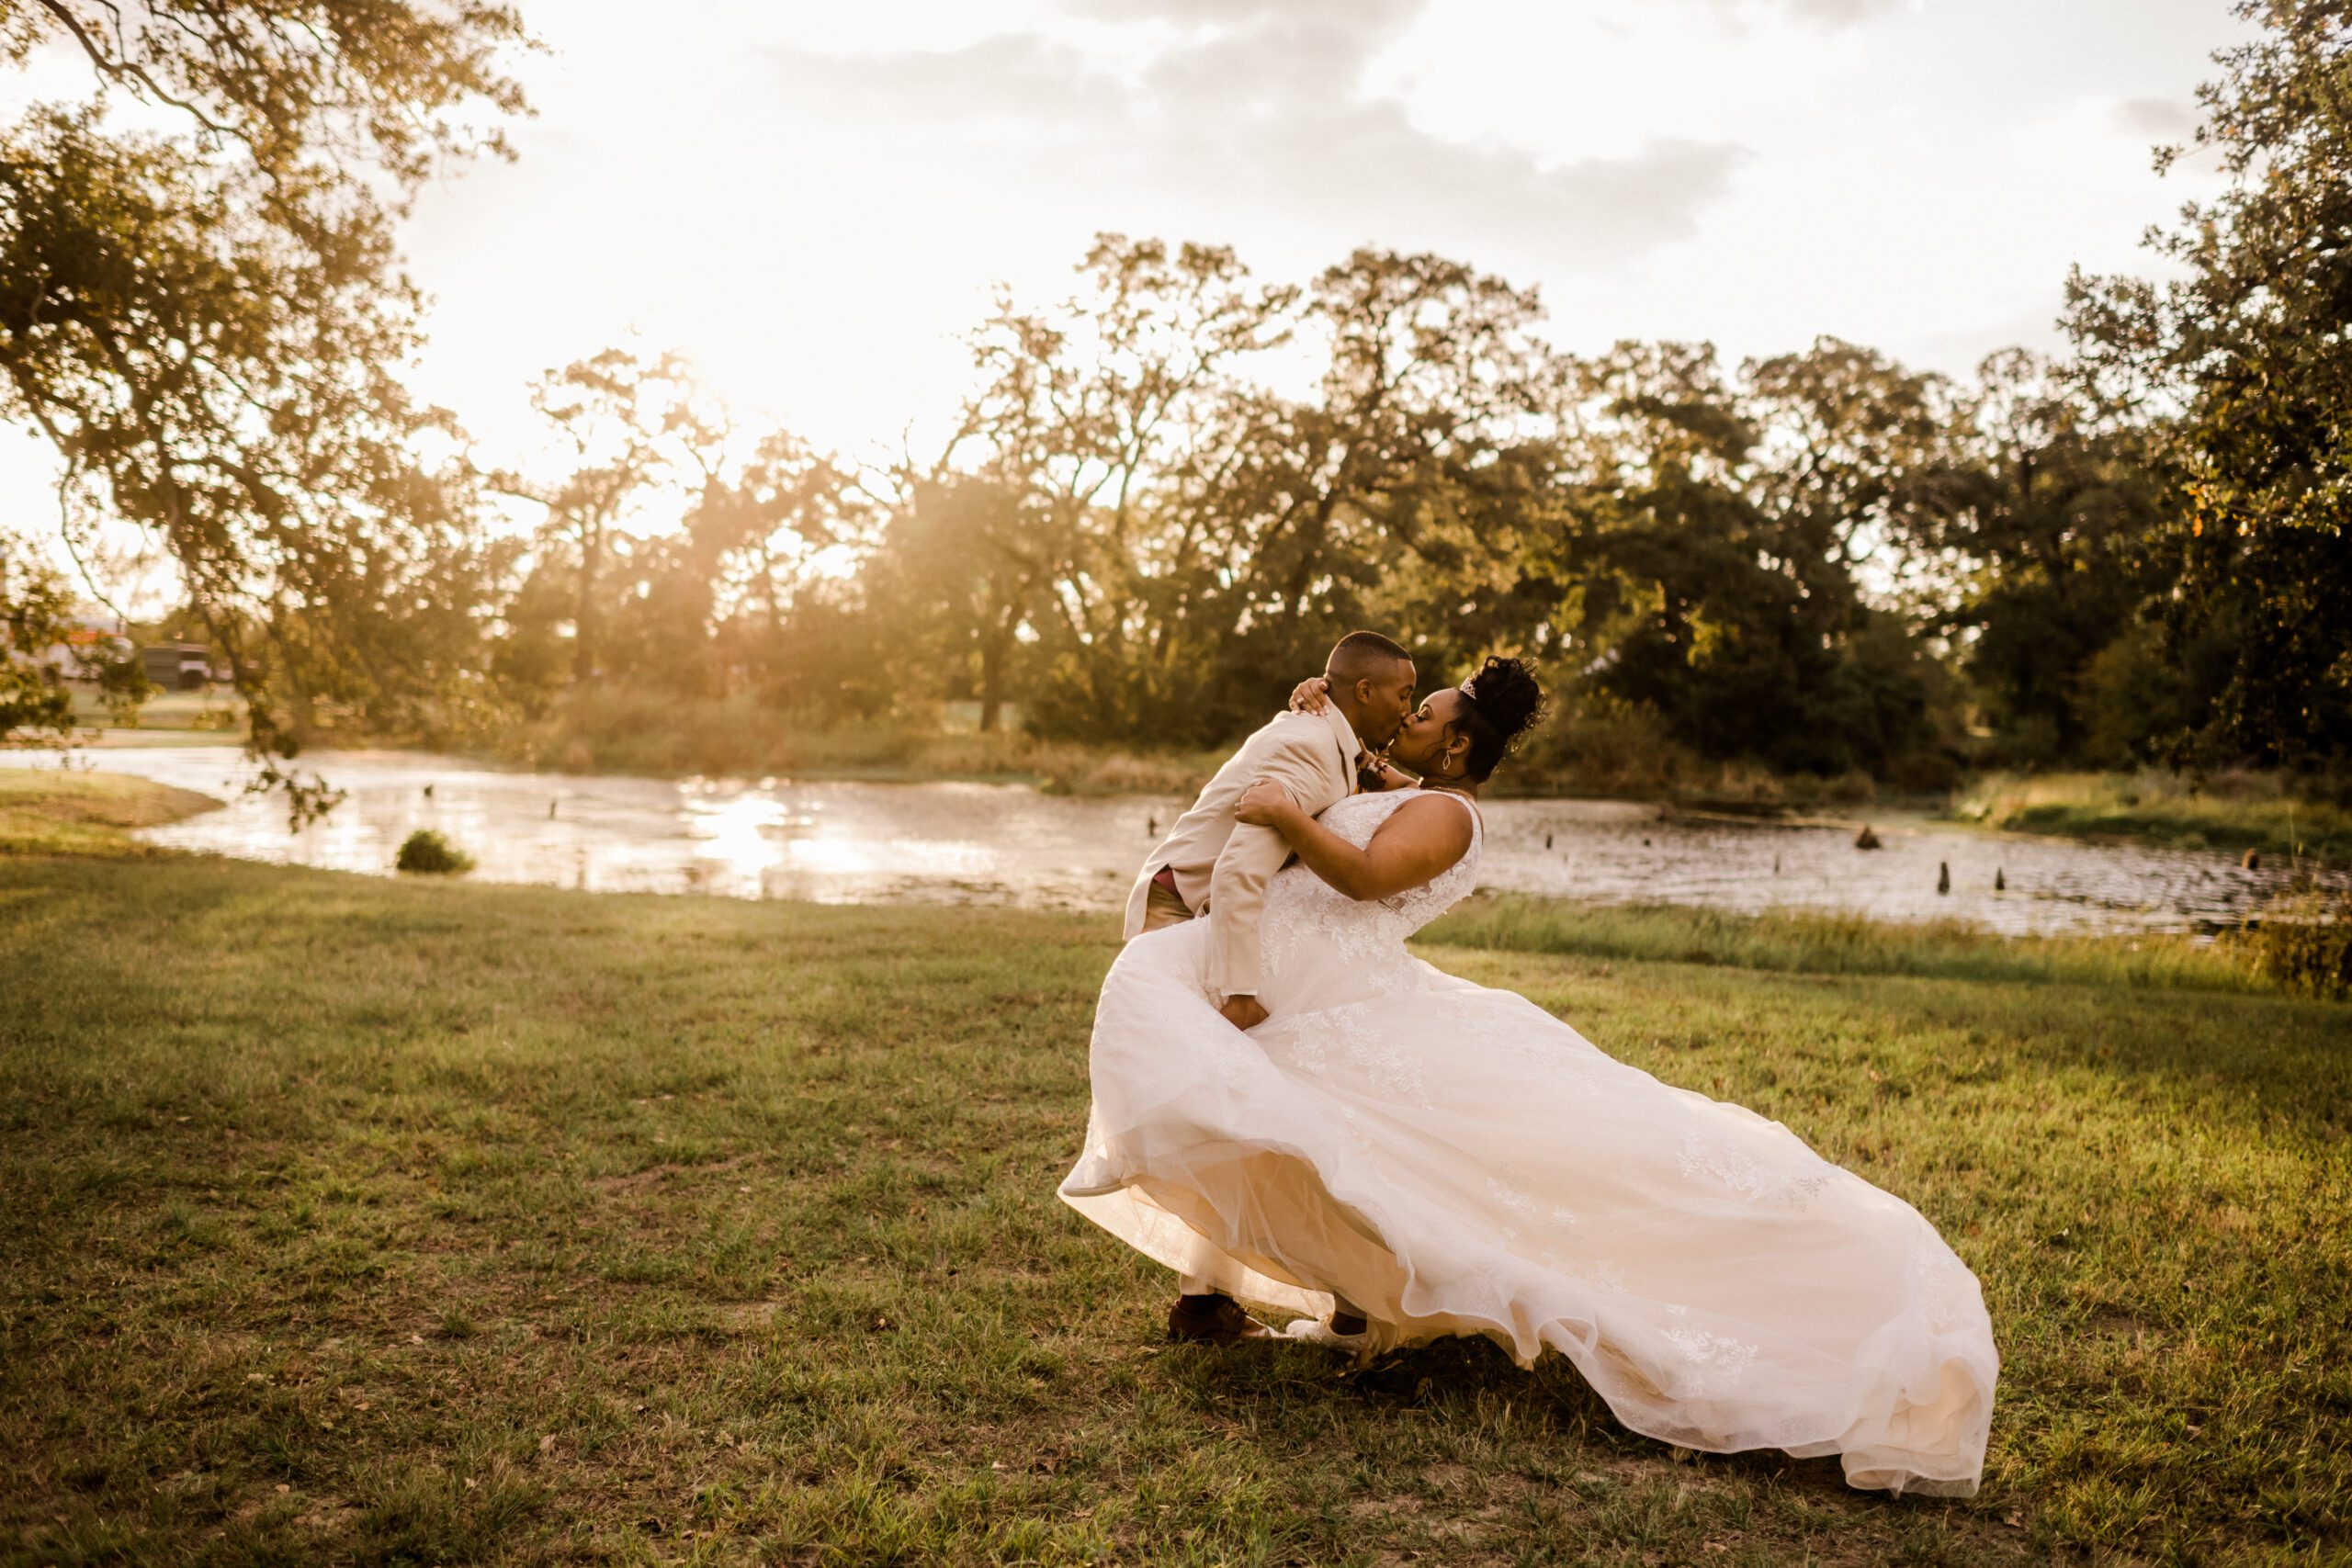 LaShwanique & Hezekiah's Wedding at the Brownstone Reserve in Bryan, Texas